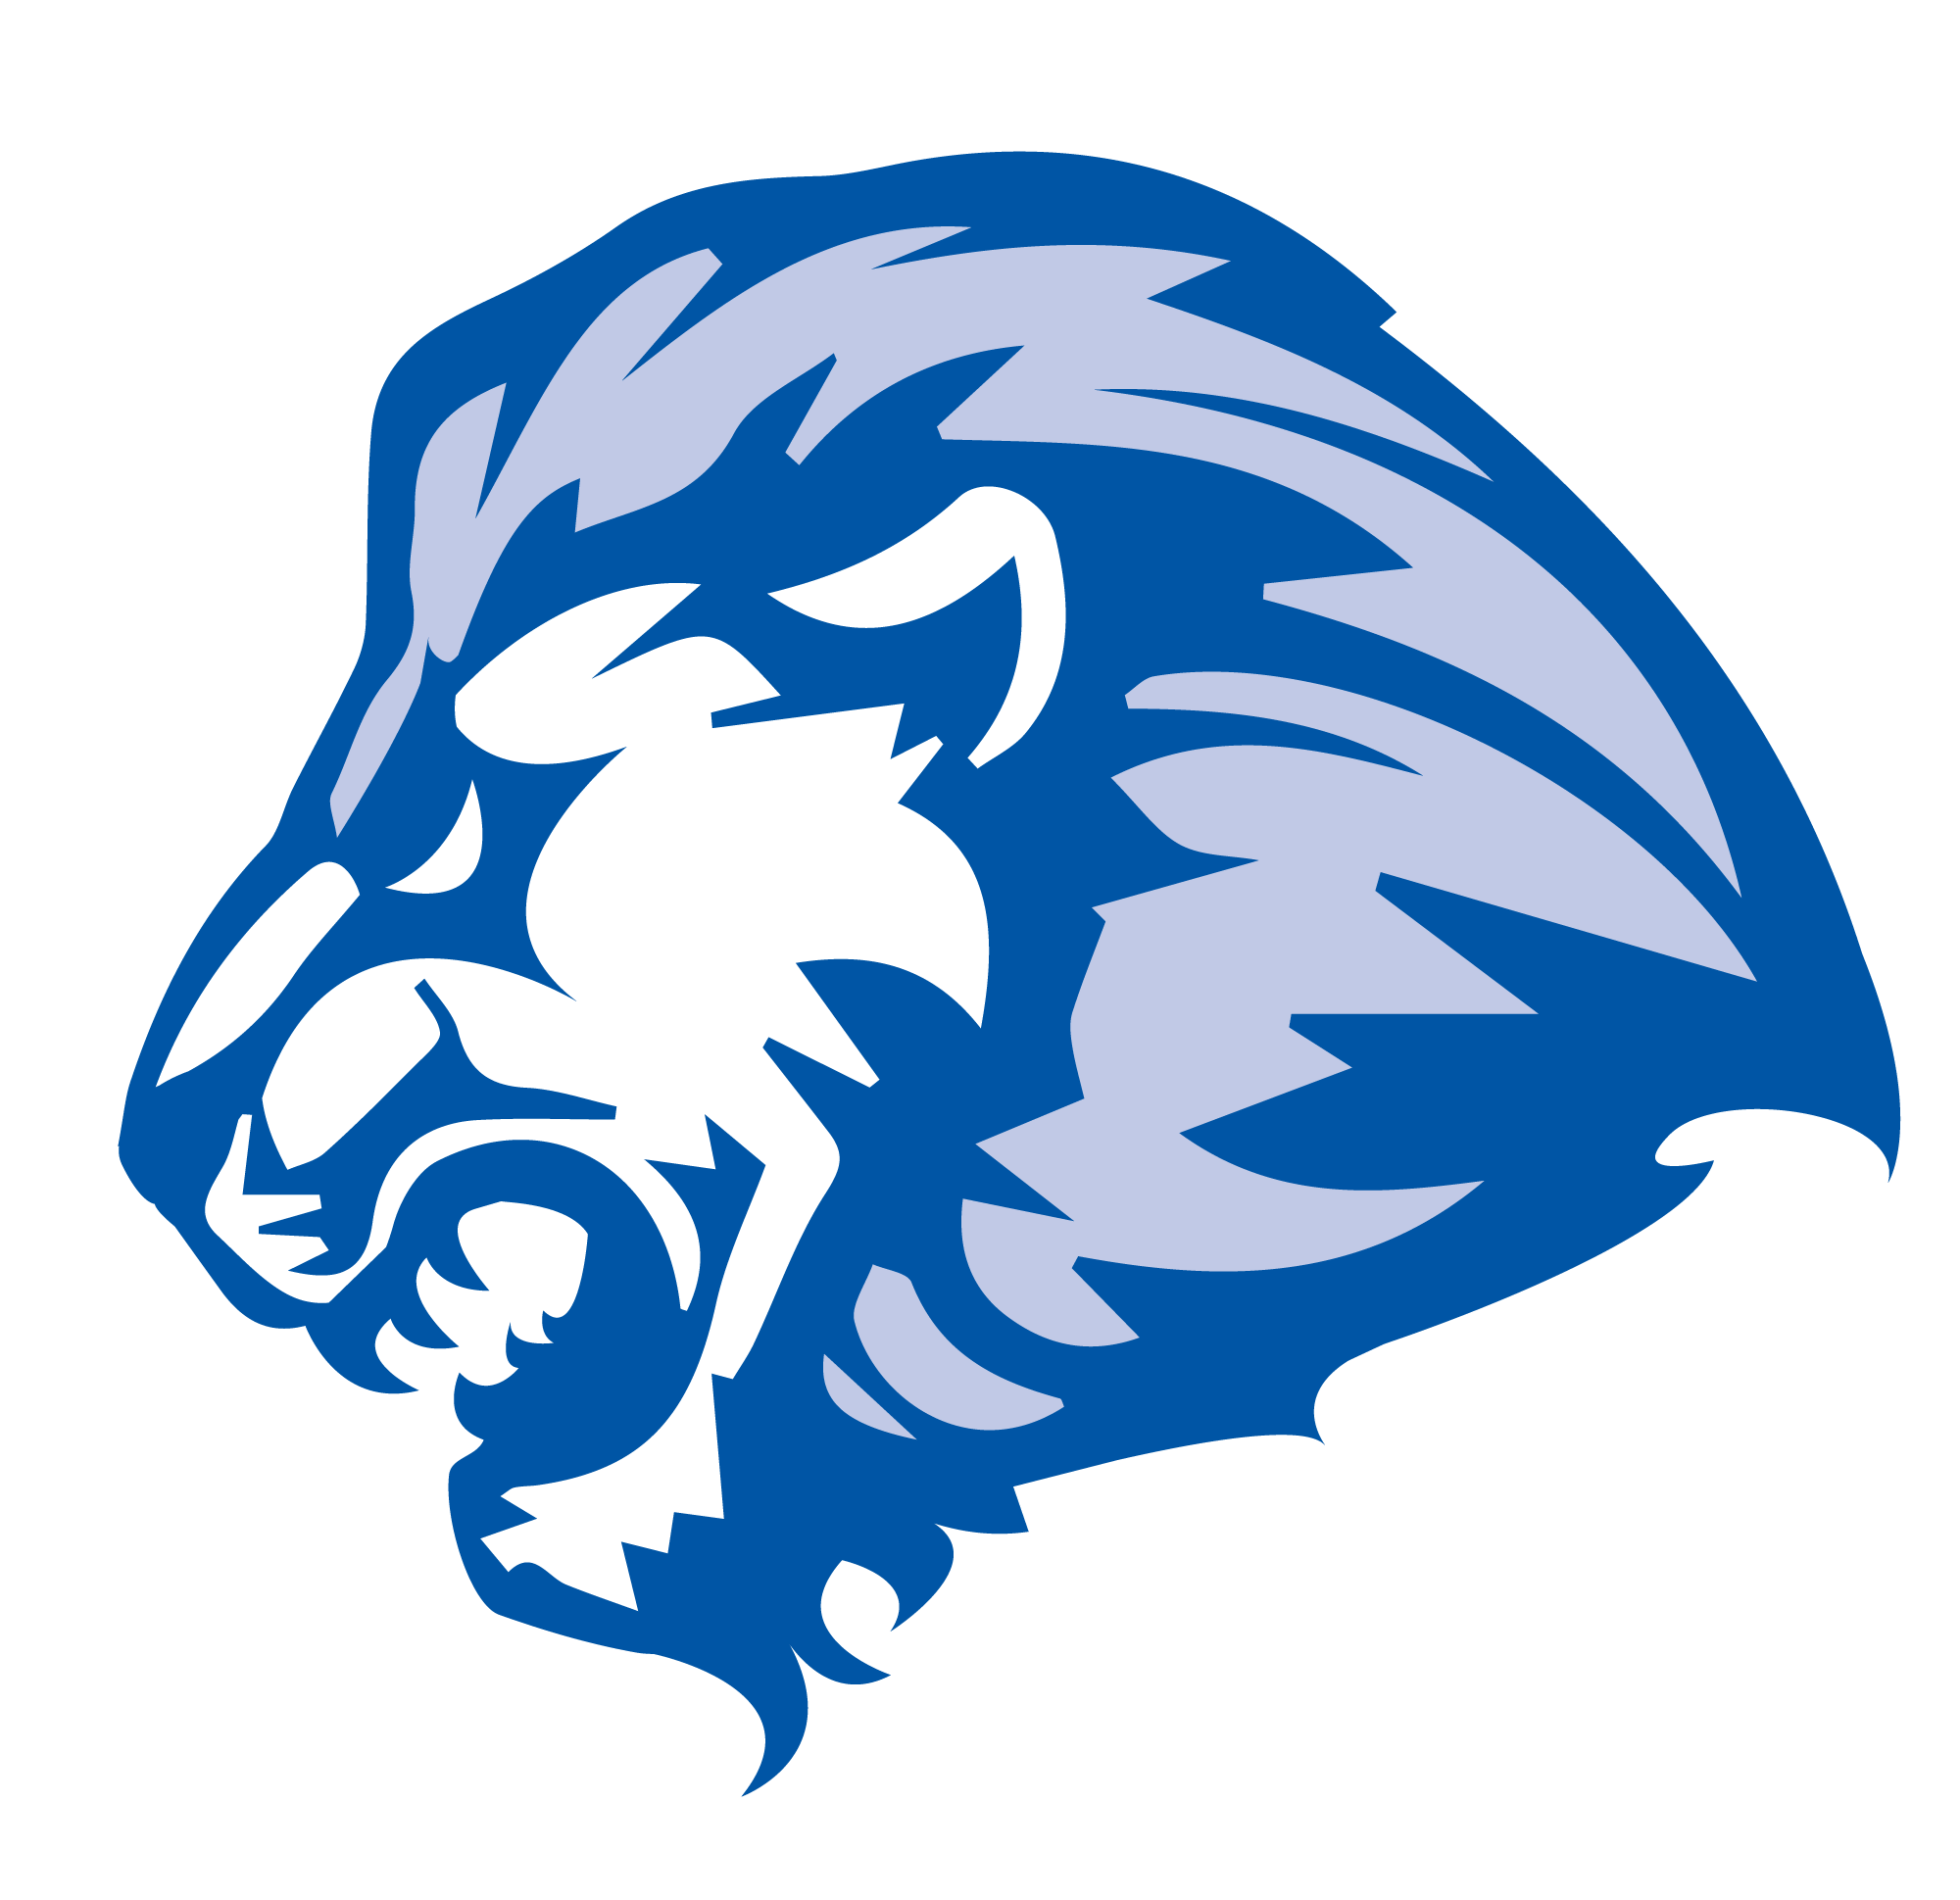 Square Blue Lion Logo - White Lion With Blue Square Logo Png Image